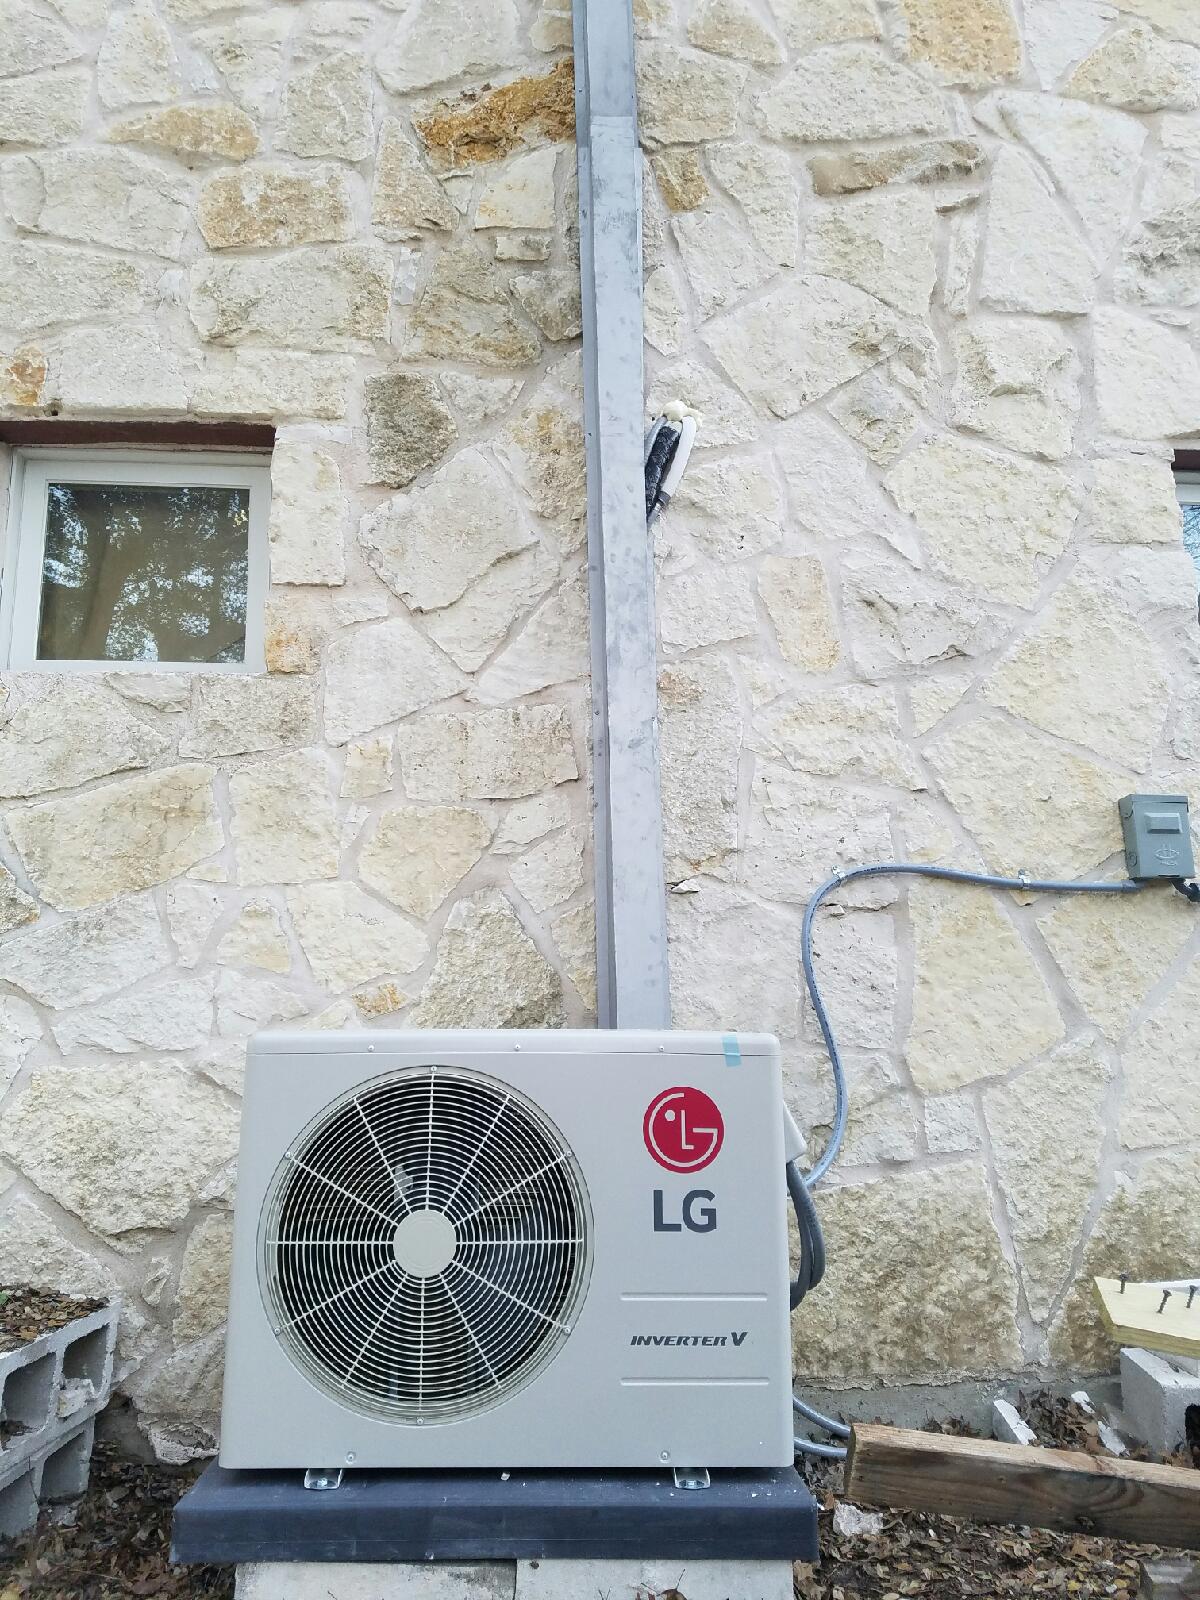 Outdoor LG air conditioner